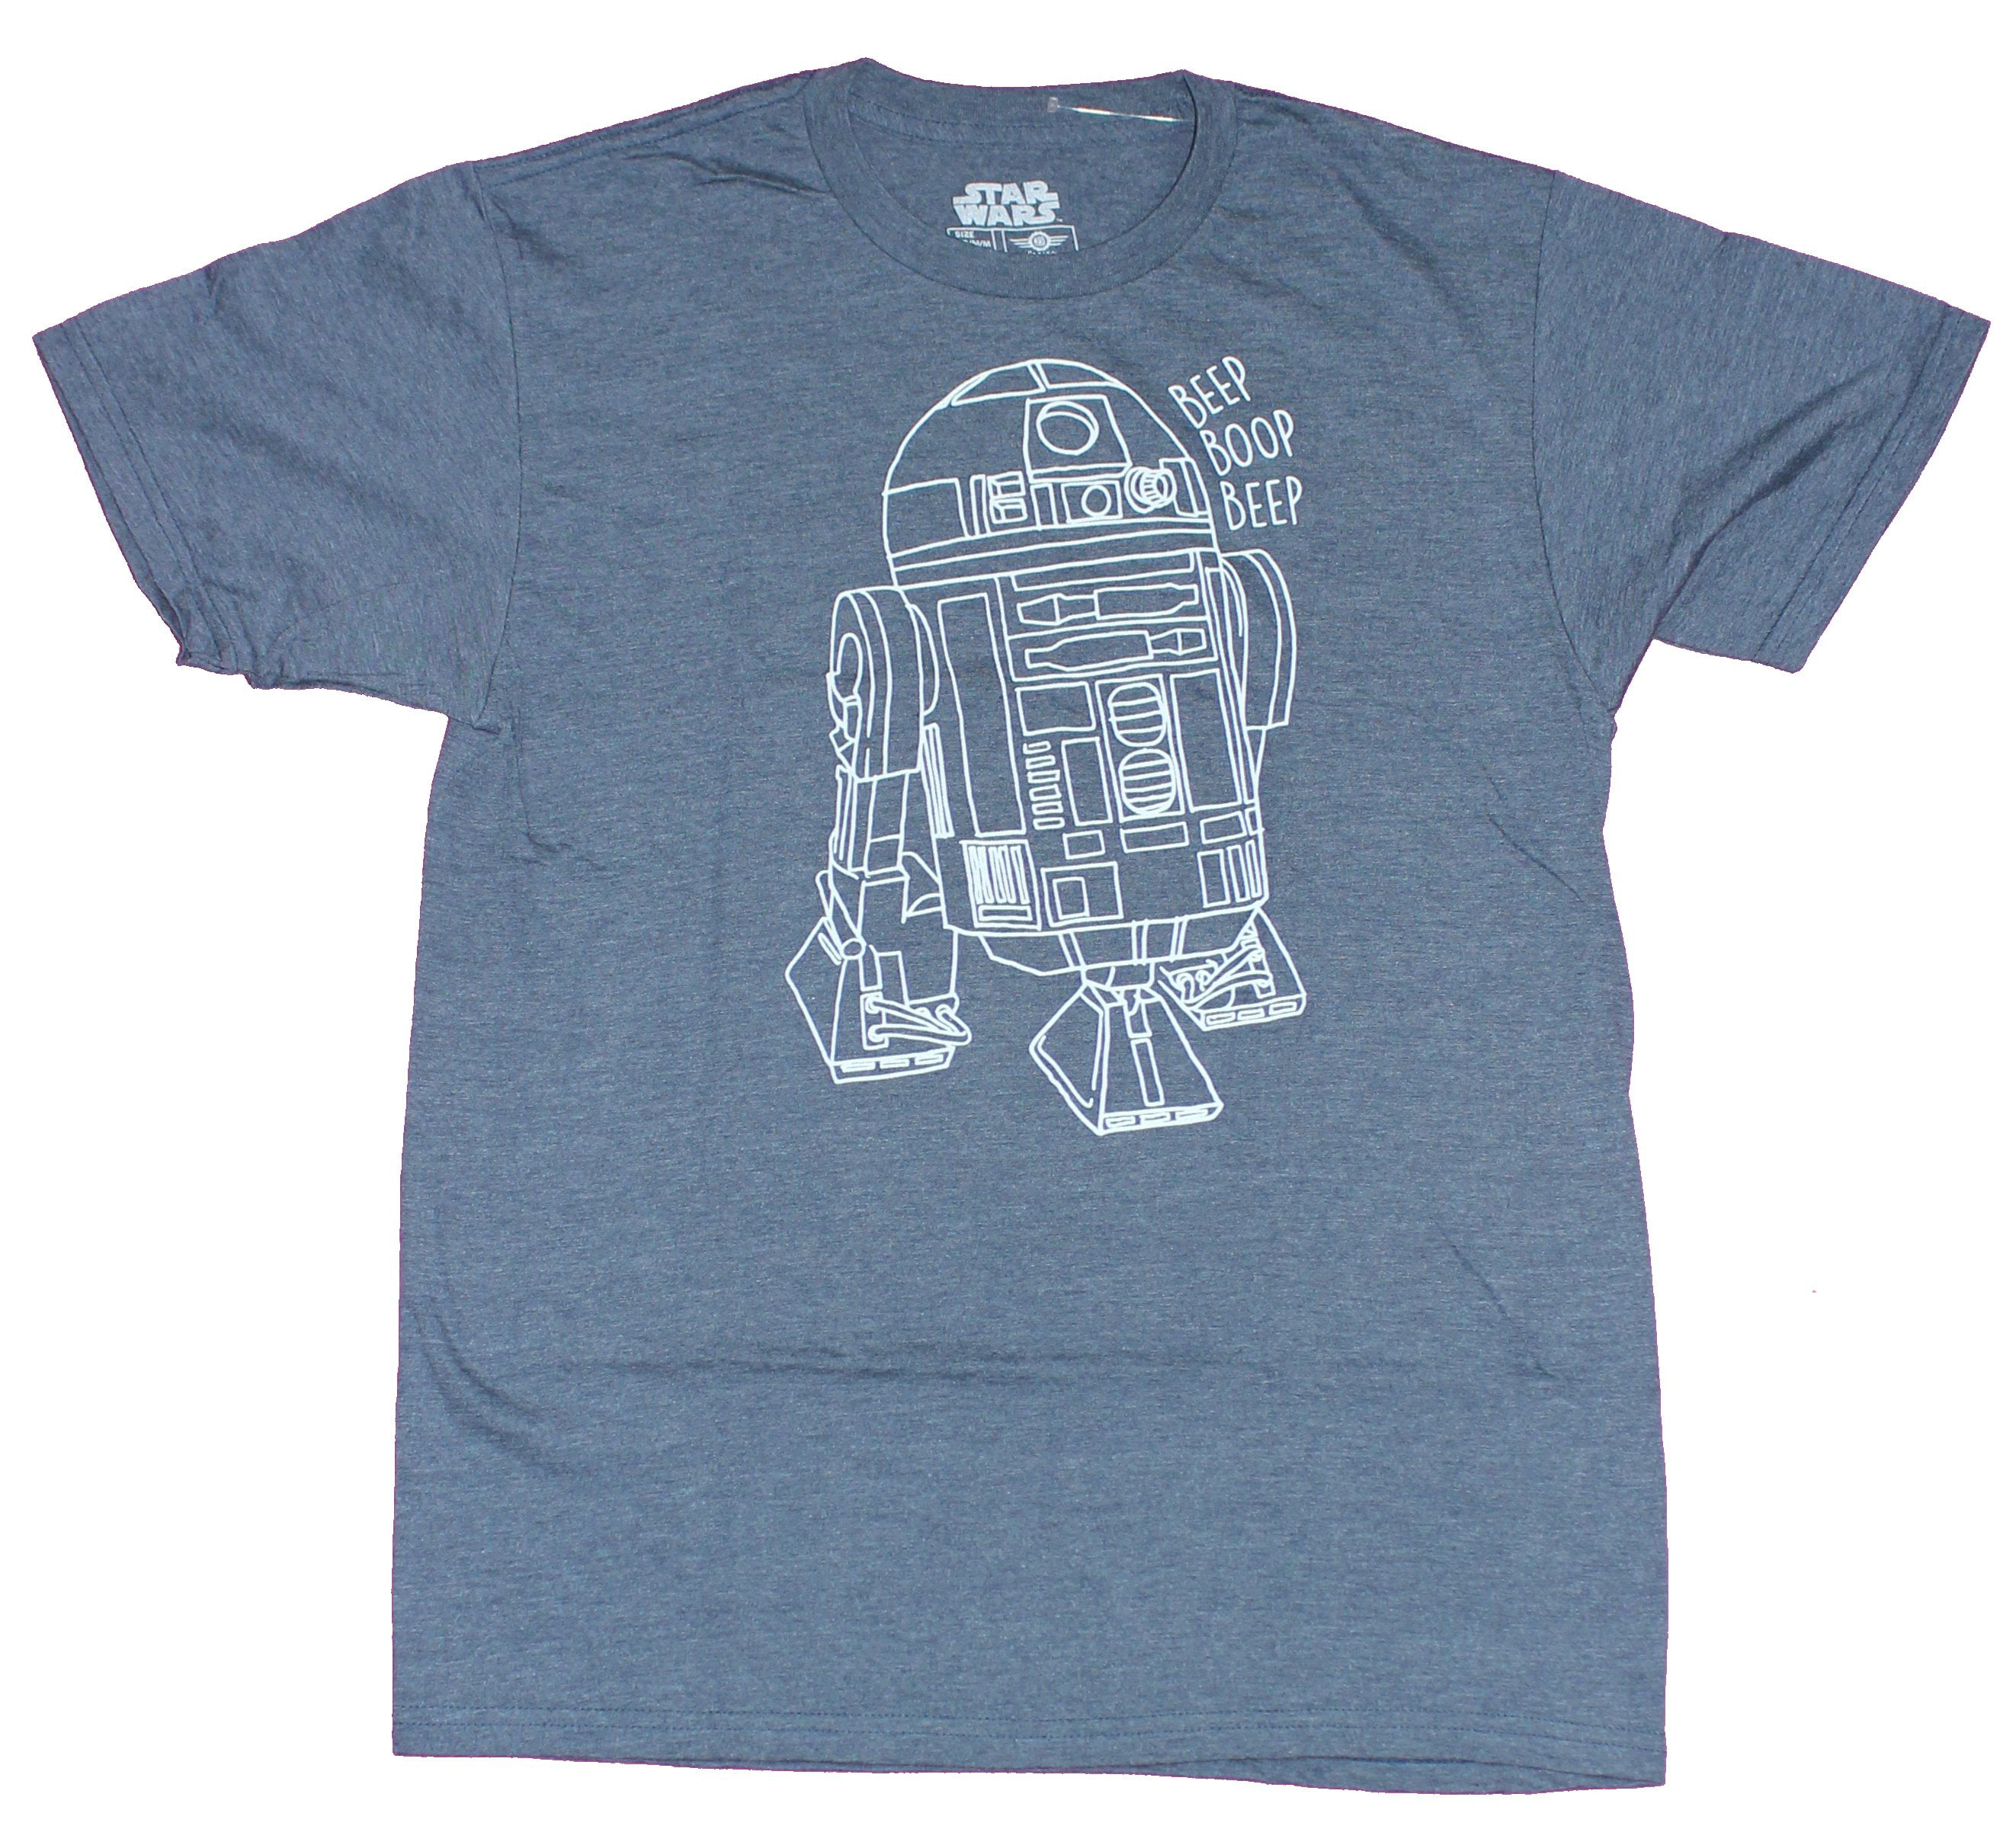 Star Wars Mens T-Shirt - R2-D2 Beep Boop Line Drawing Image (Small)